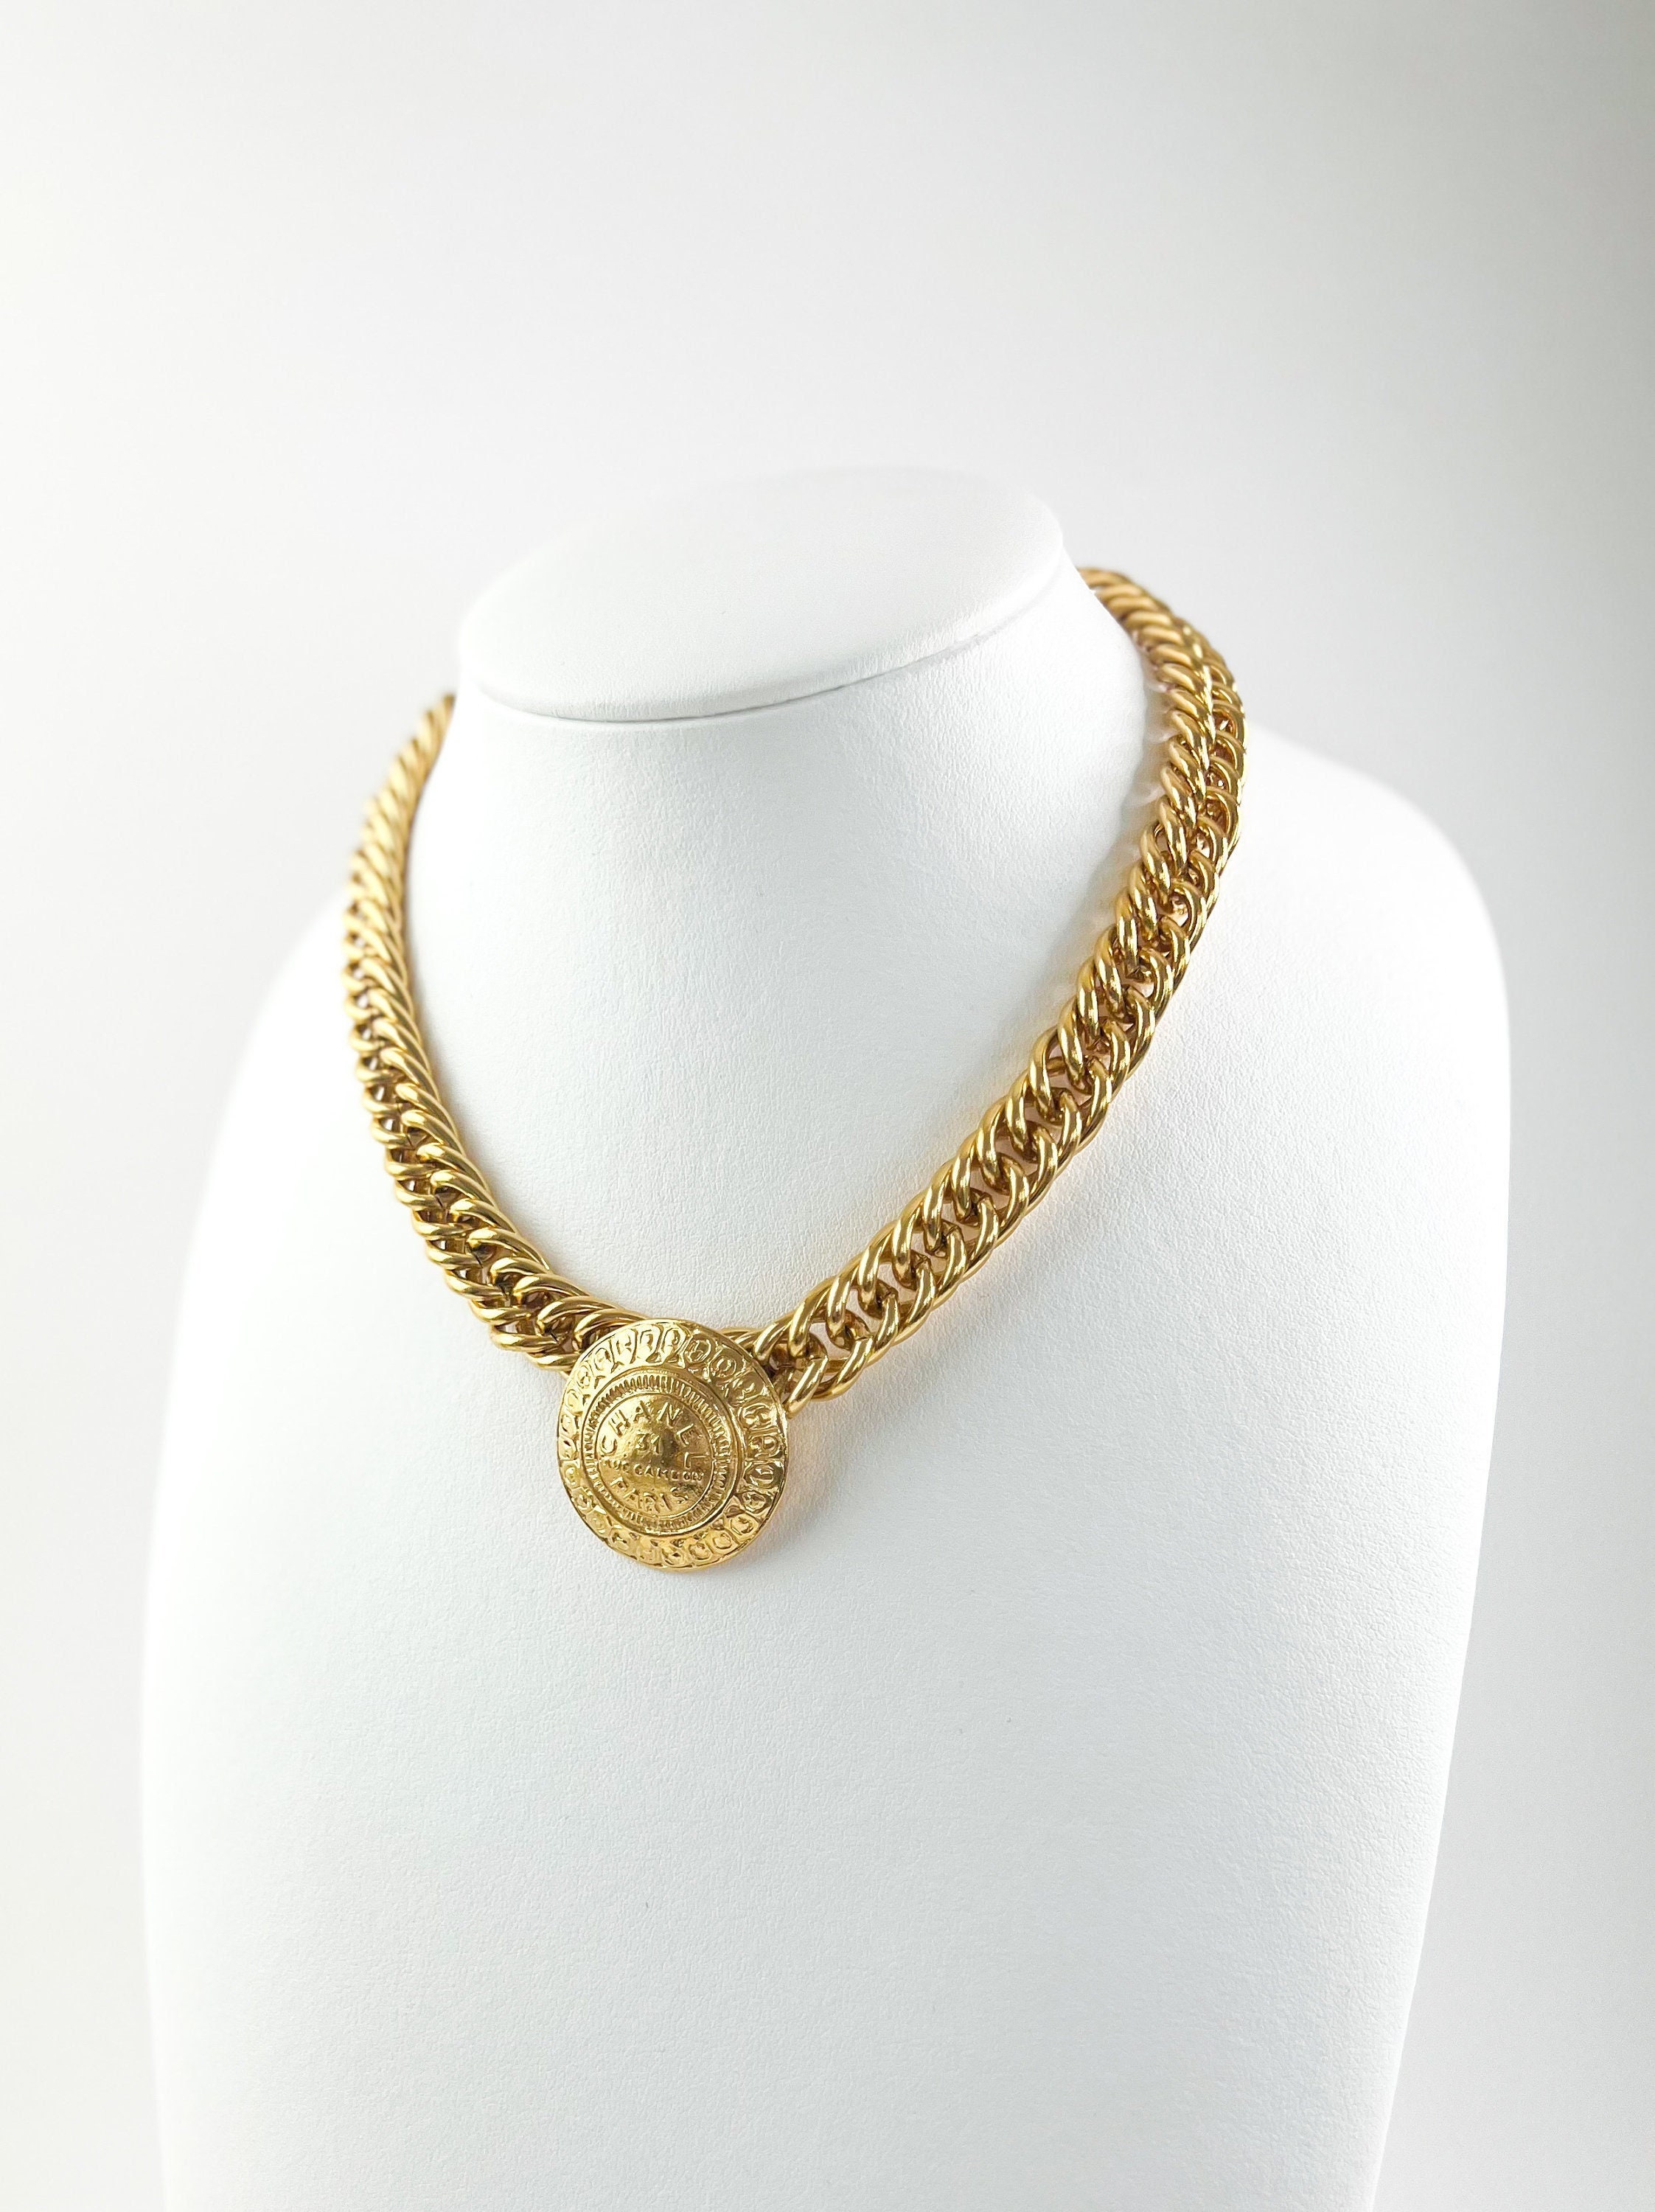 Chanel Gold Charm CC Chain Rhinestone Link Evening Pendant Choker Necklace